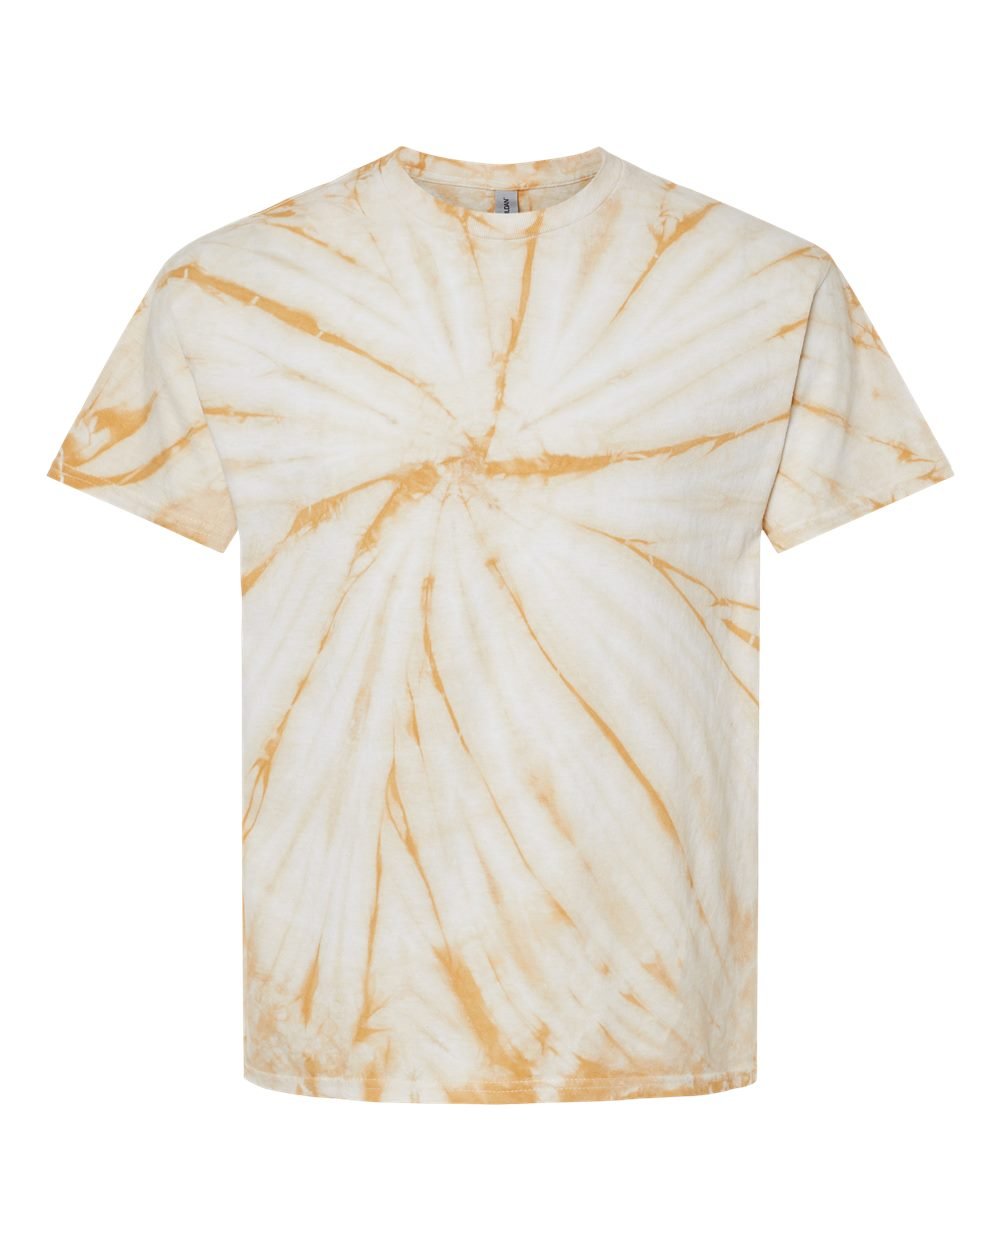 Gold and White Tie Dye Shirts - Nebula - Tie Dye Wholesaler